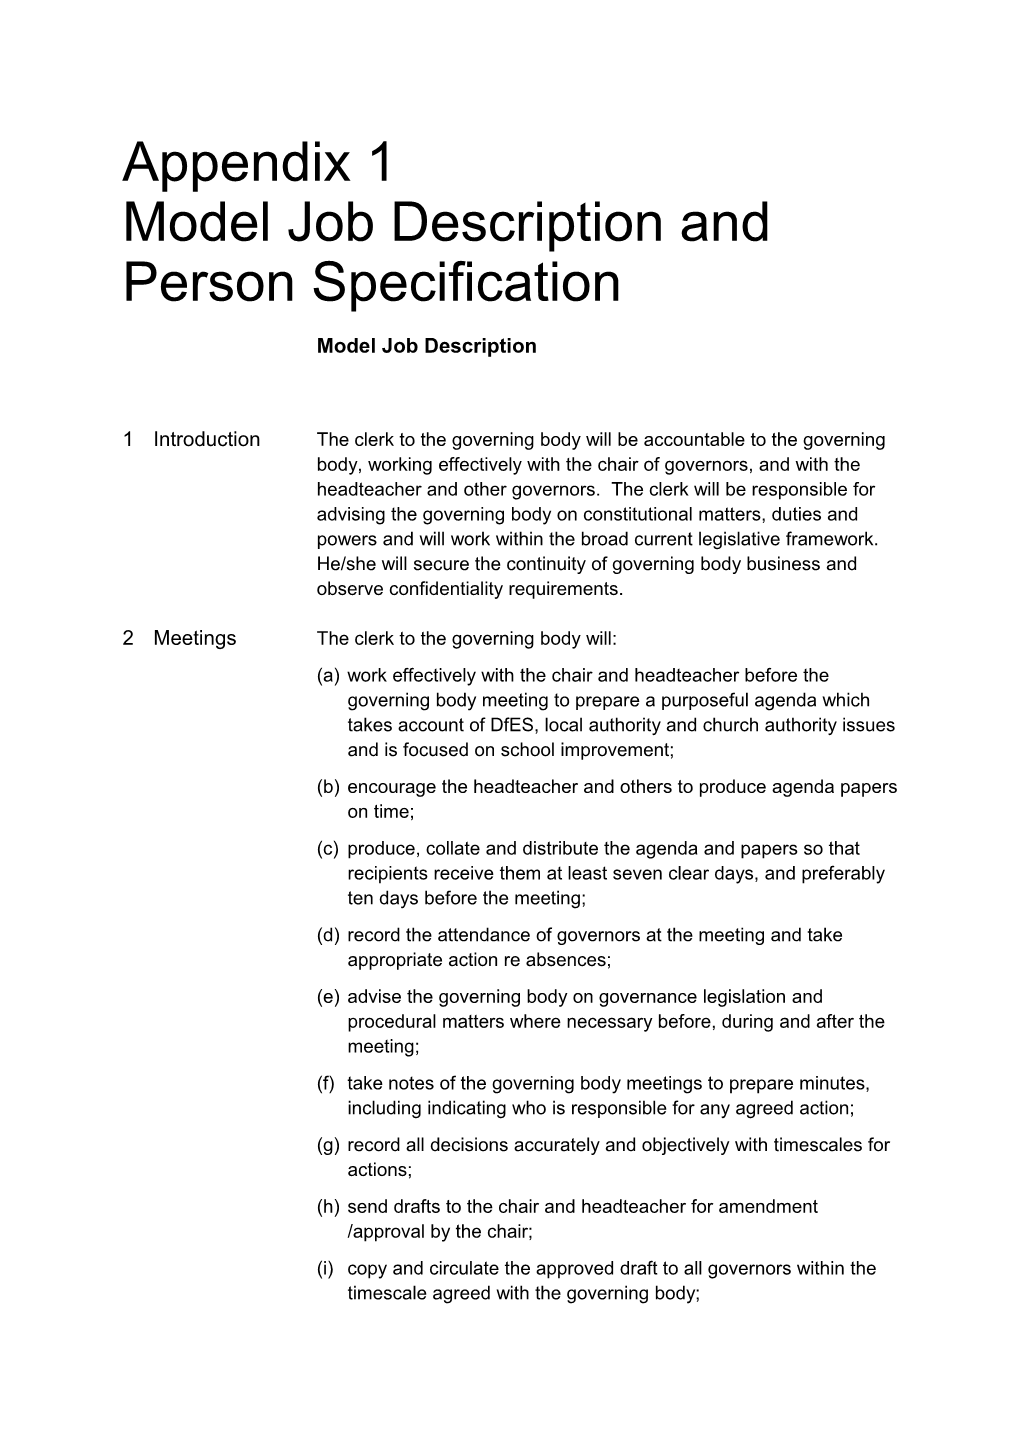 Model Job Description and Person Specification